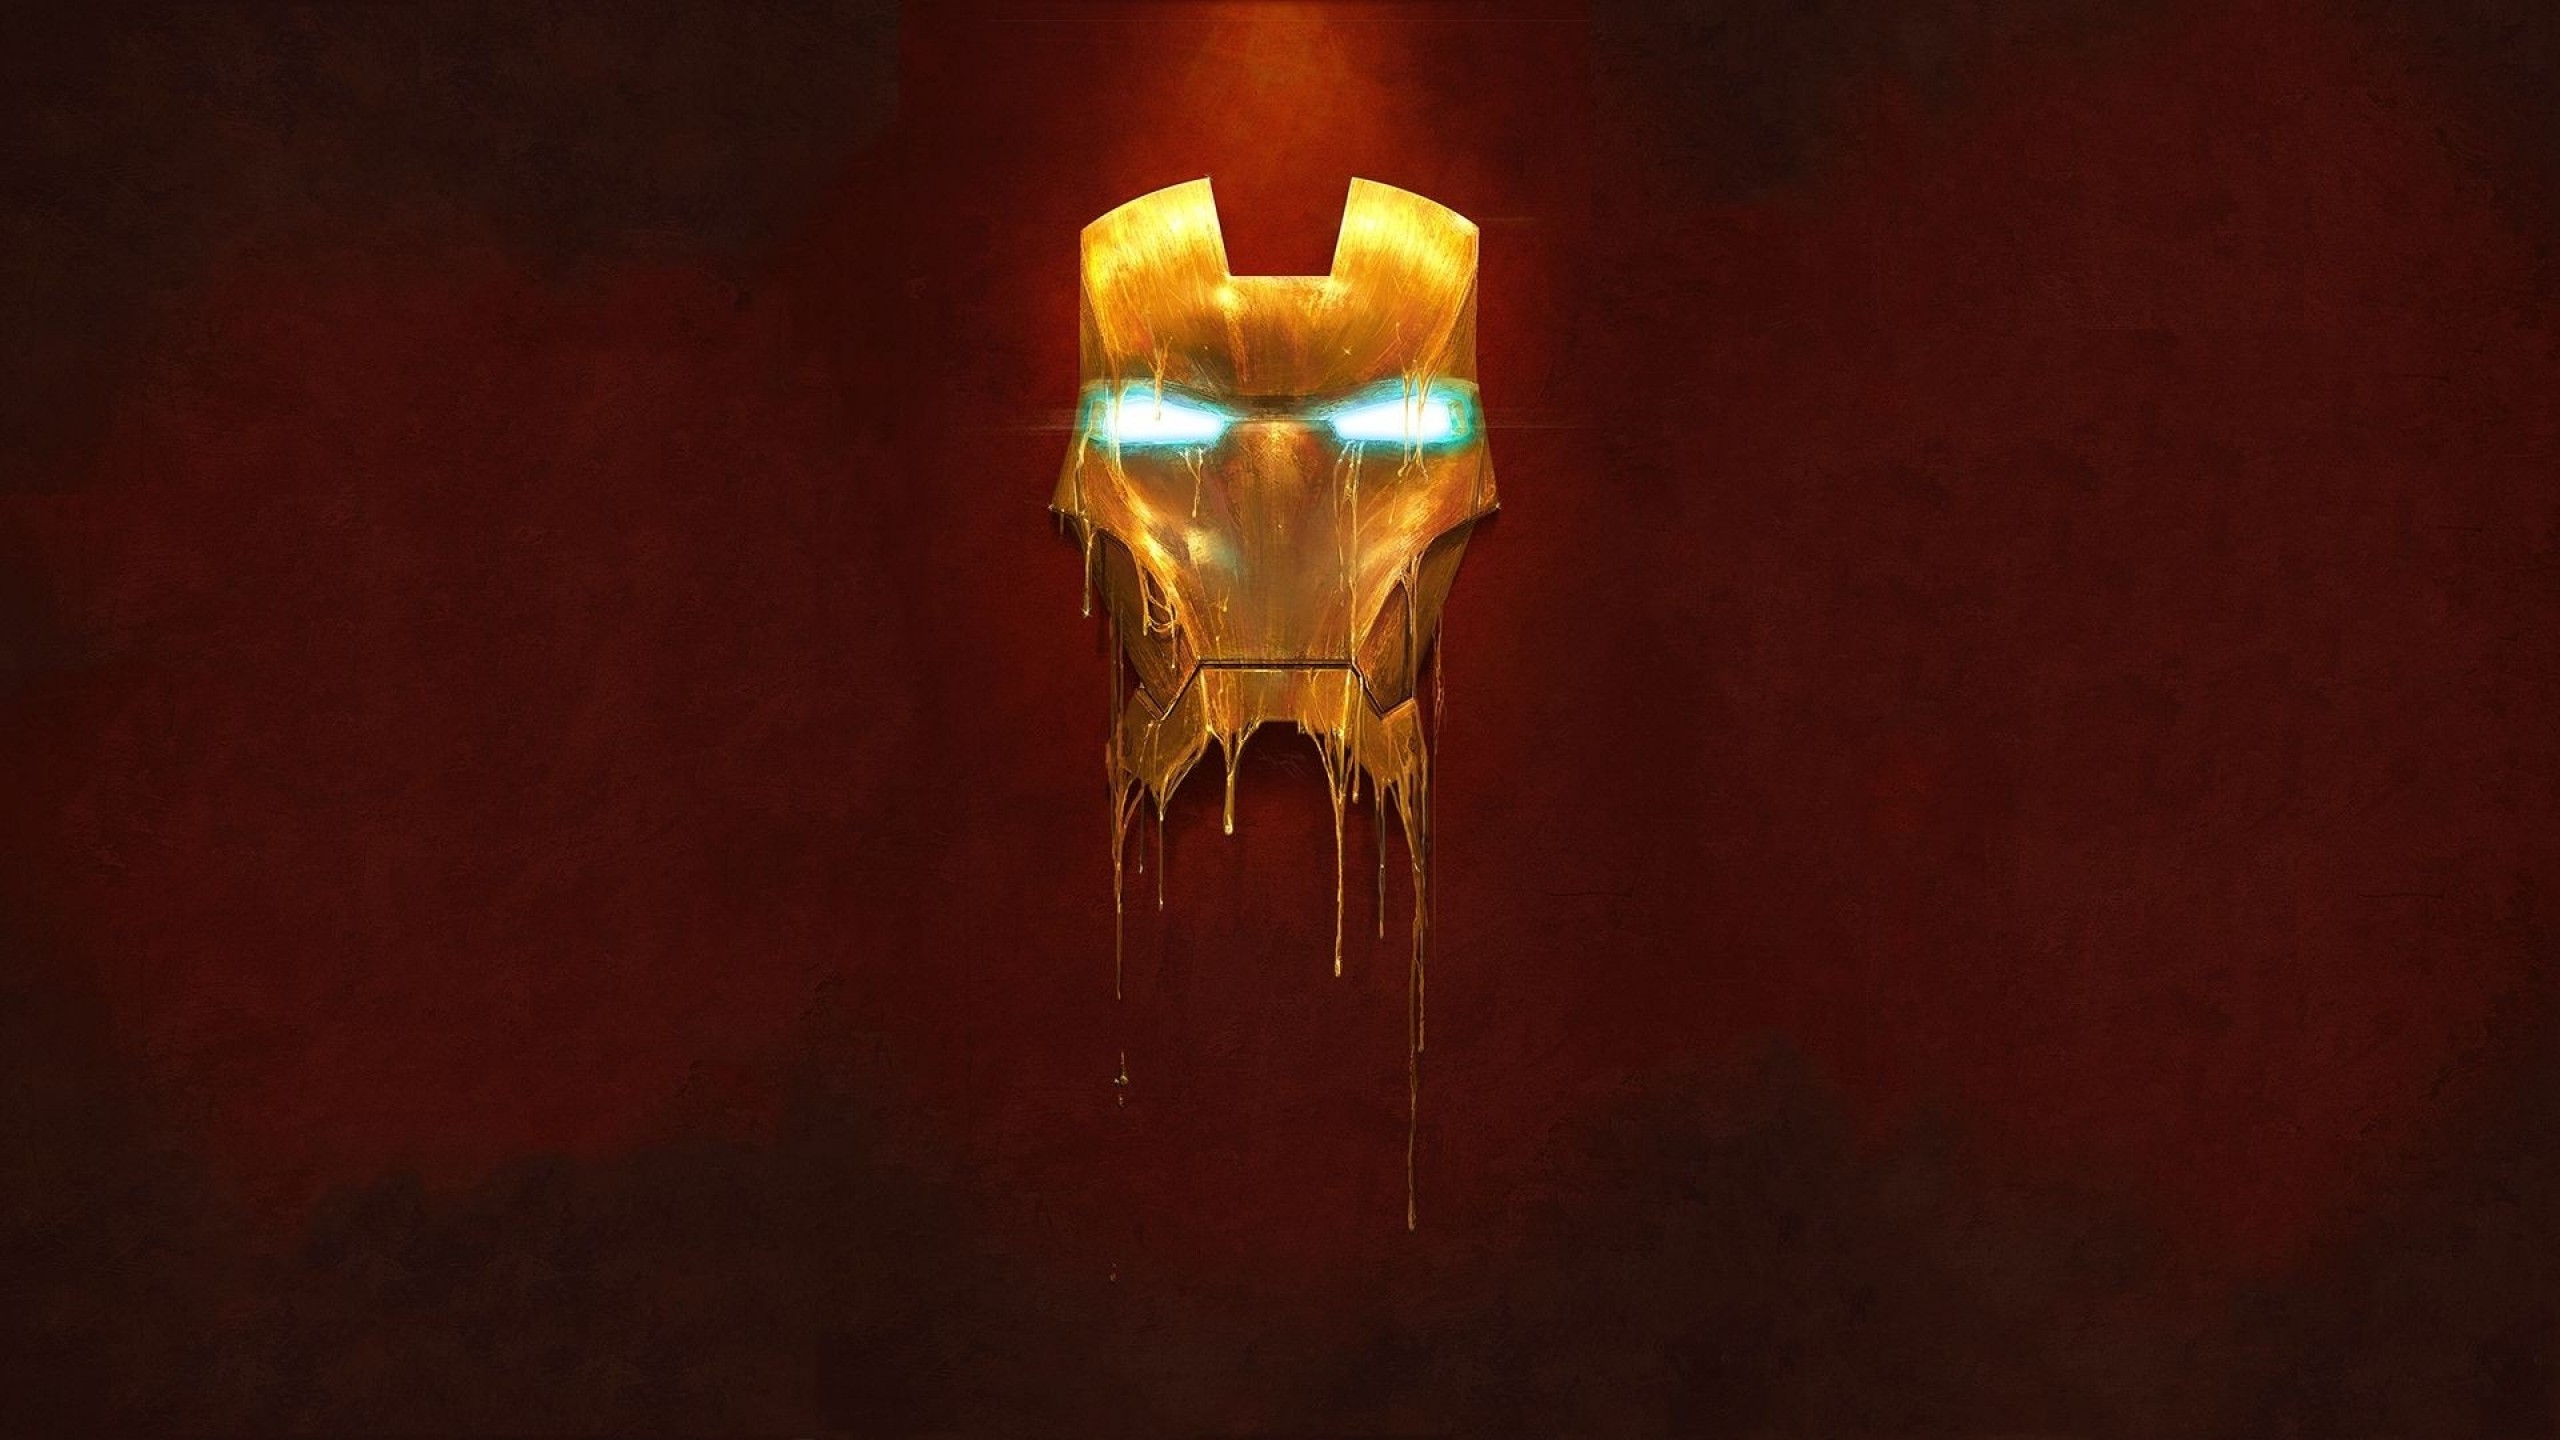 Iron Man, Marvel Comics Wallpaper